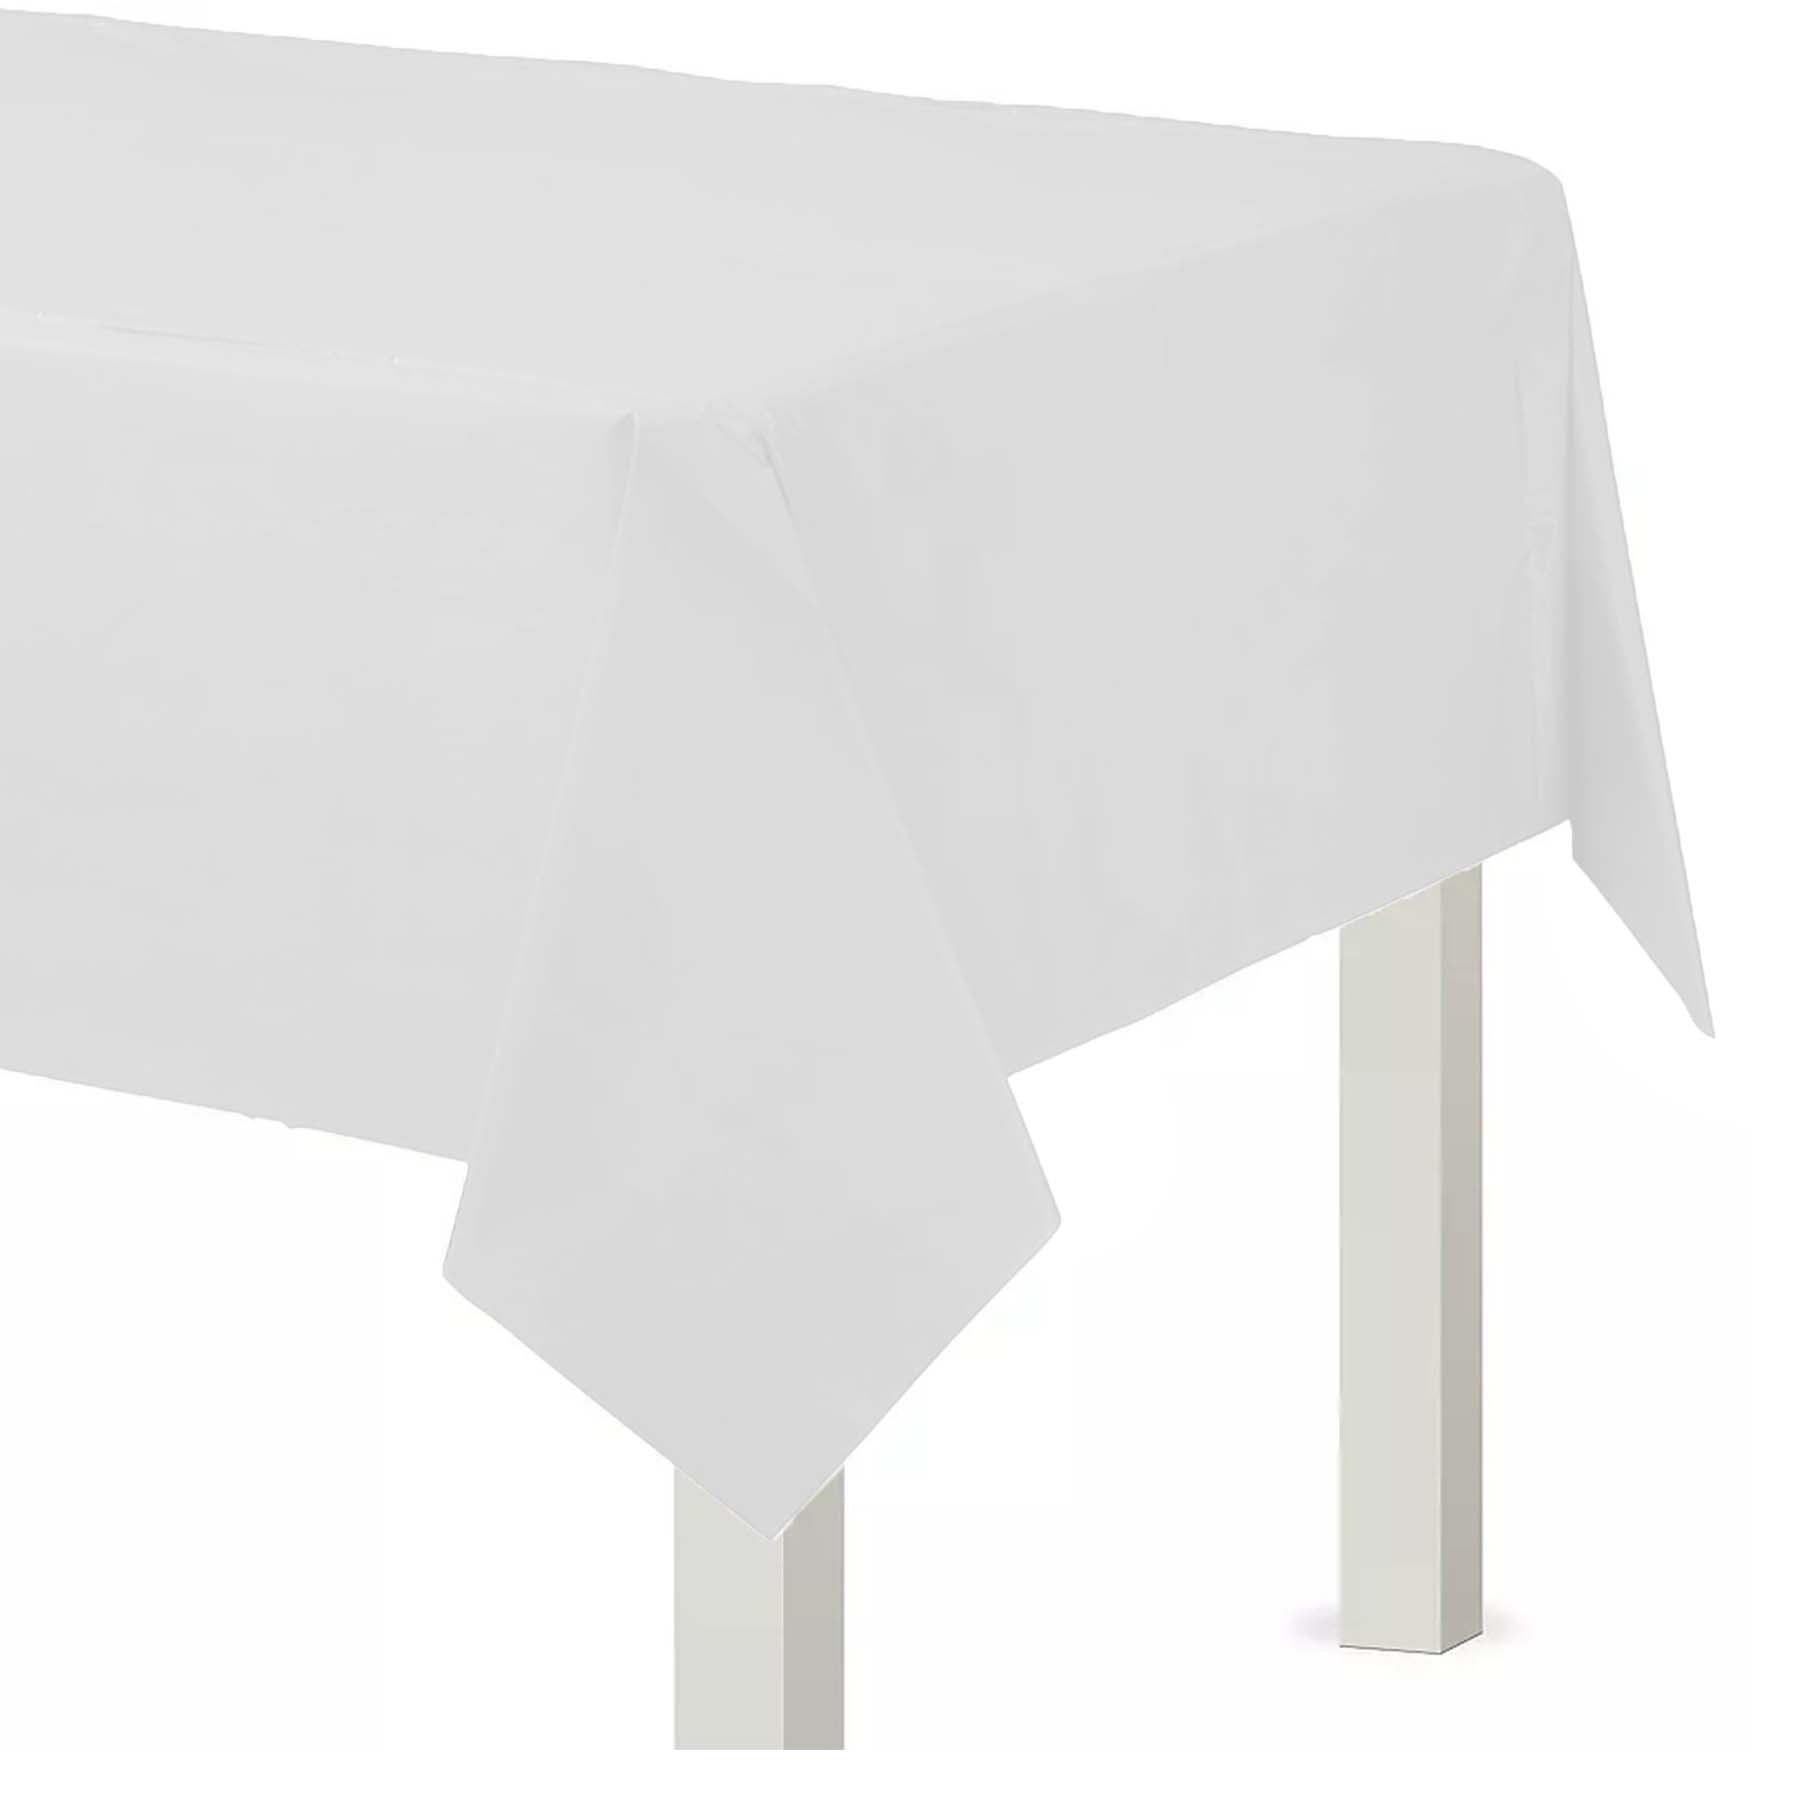 Rectangular Table cover, Creamy